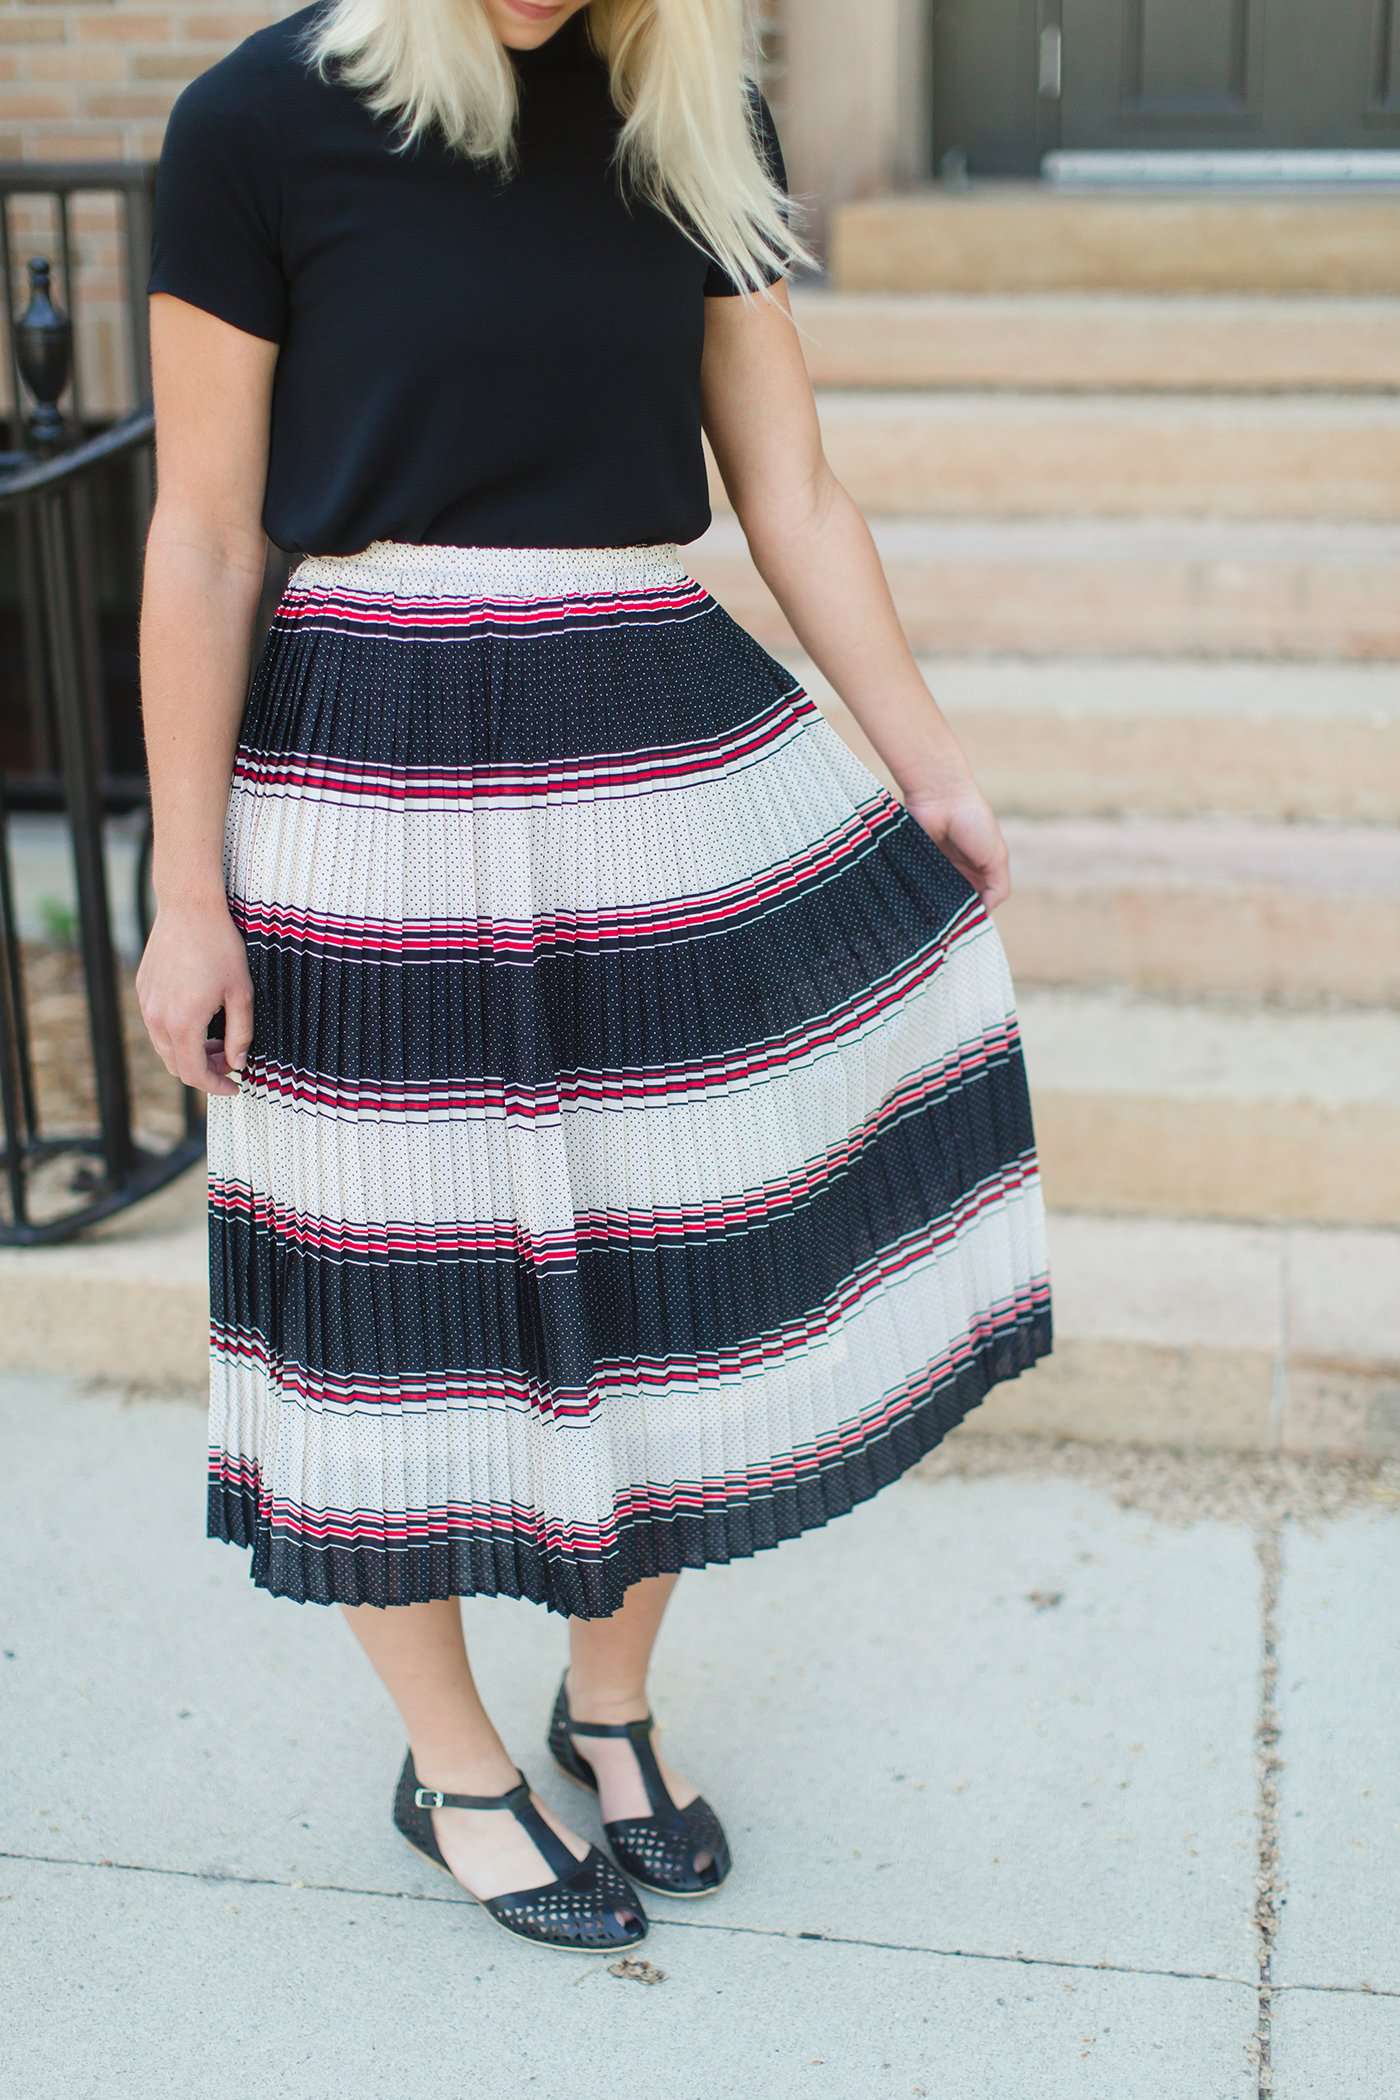 Polka Dot & Striped Pleated Skirt - FINAL SALE Skirts